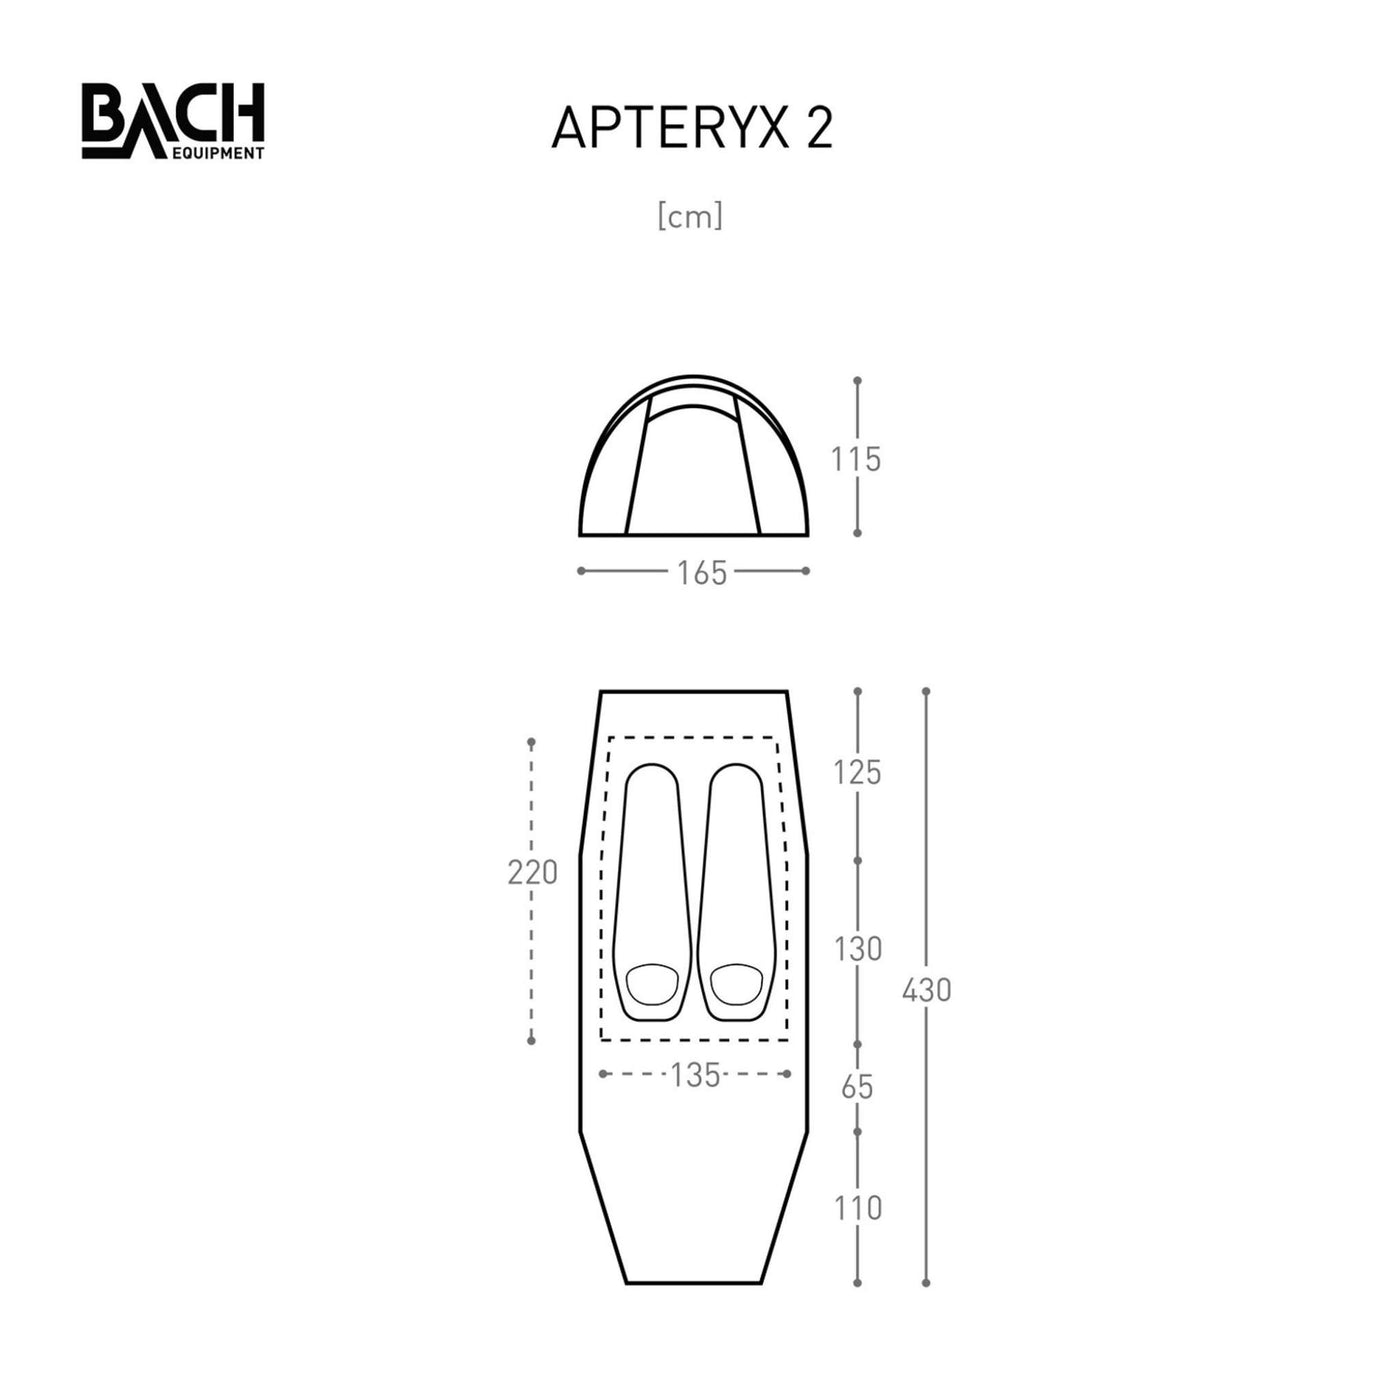 Bach Tent Apteryx 2